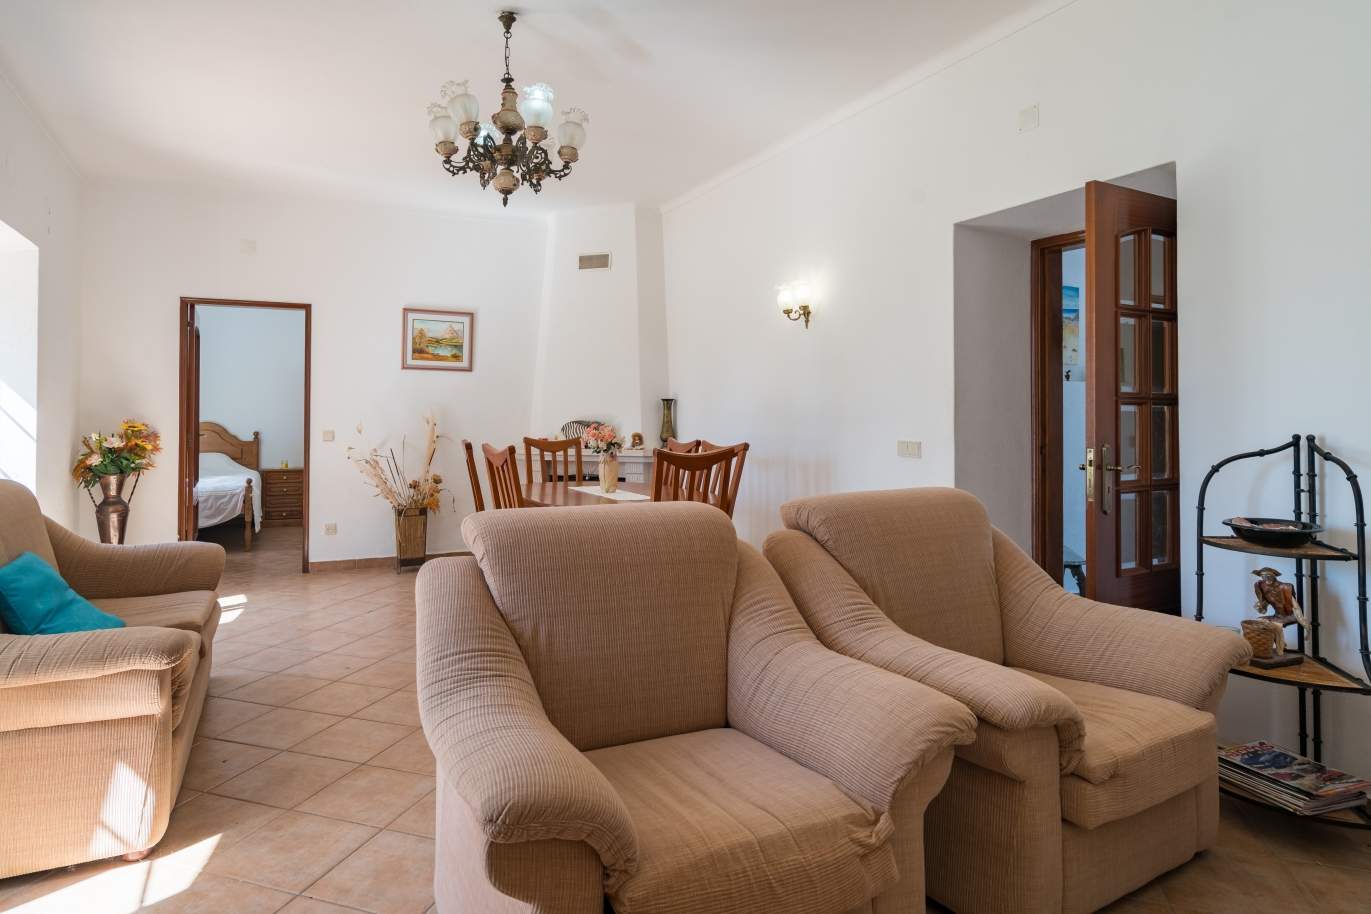 Sale of villa with pool in Boliqueime, Loulé, Algarve, Portugal_98520